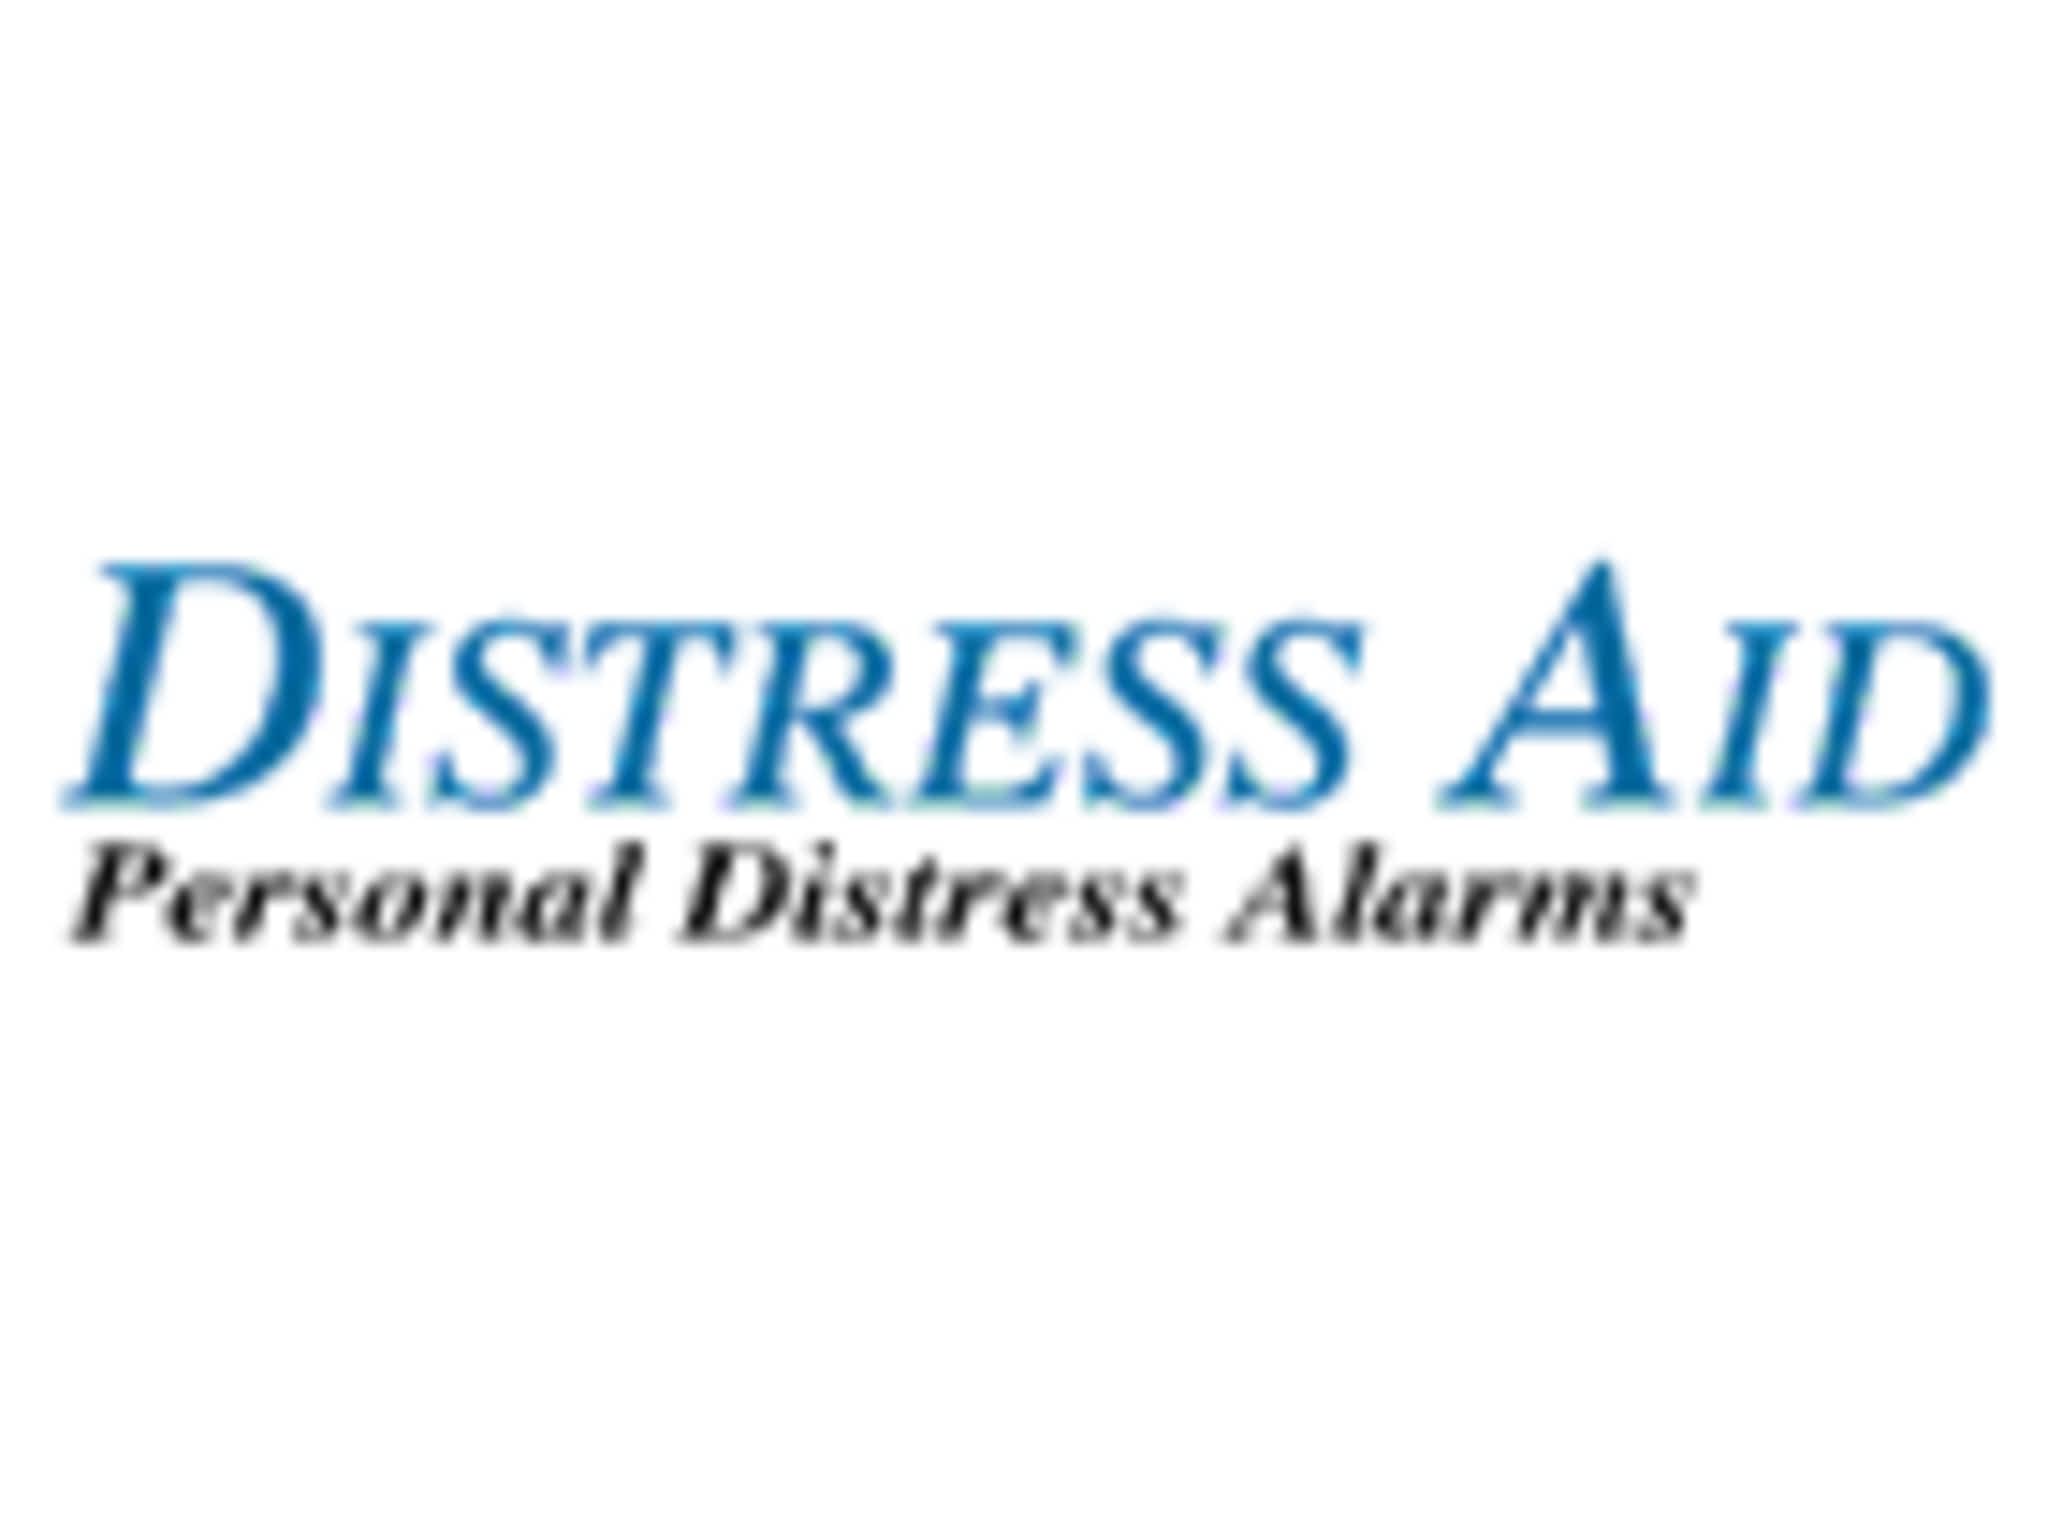 photo Distress Aid Mobile Alarms